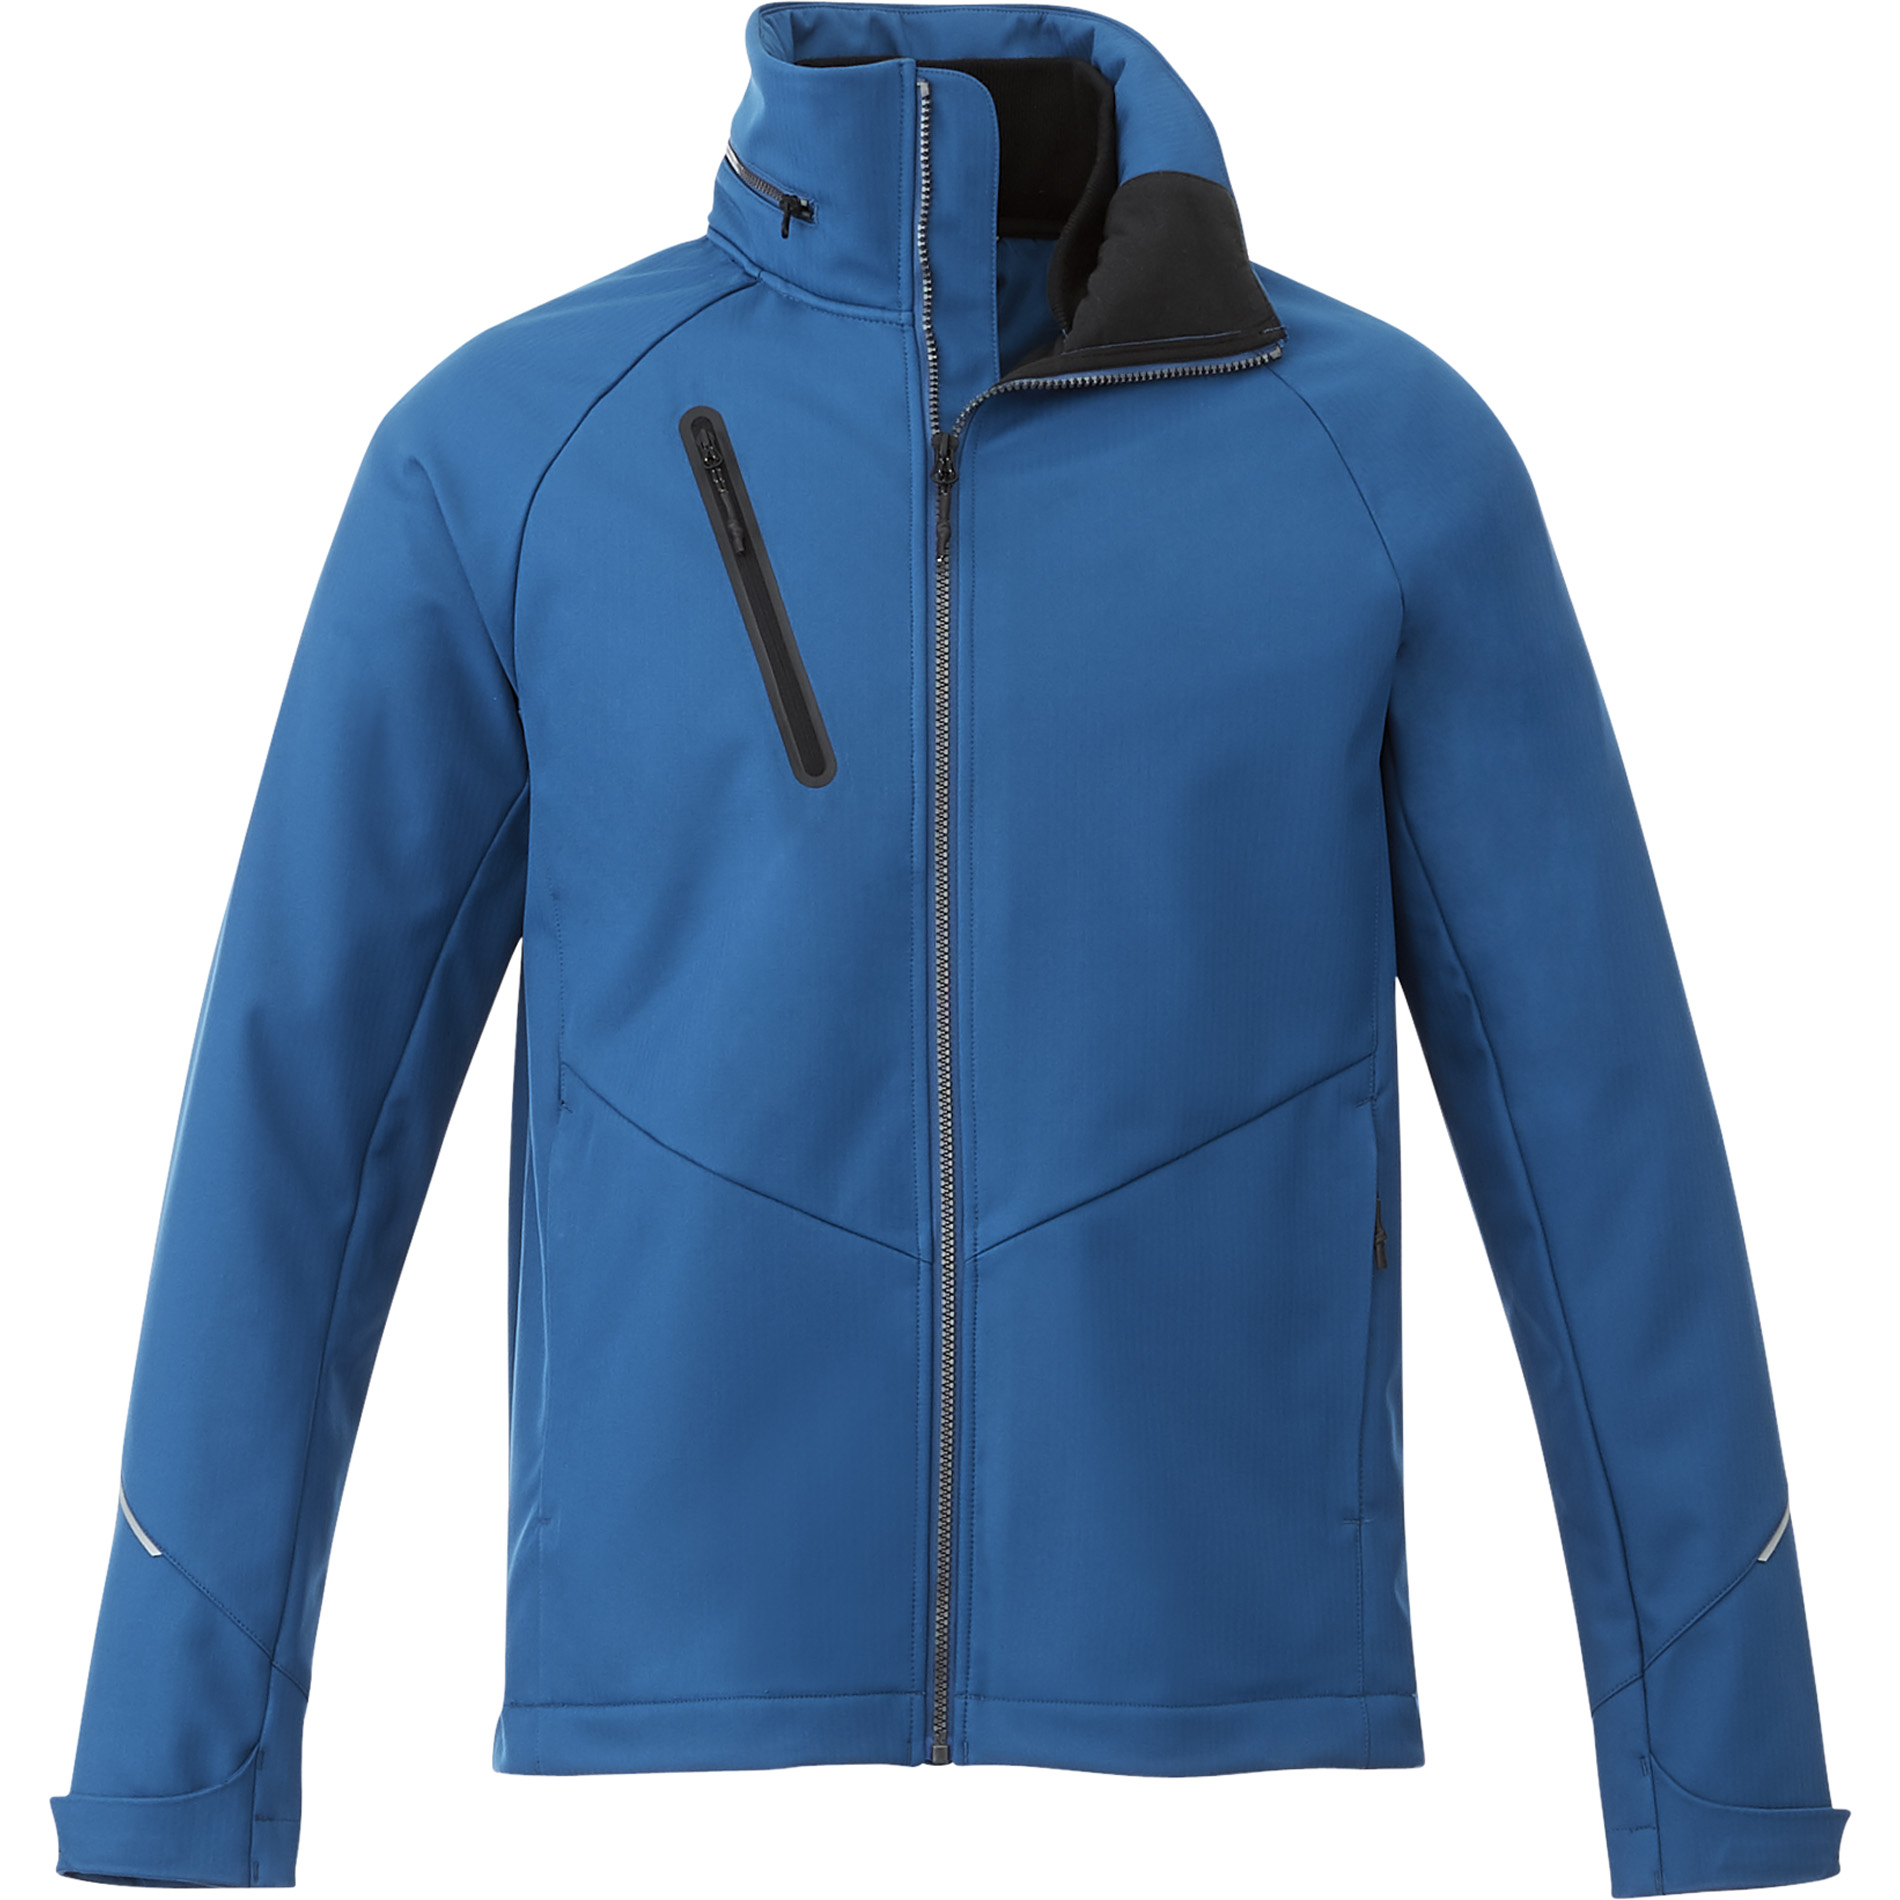 Trimark TM12907 - Men's PEYTO Softshell Jacket